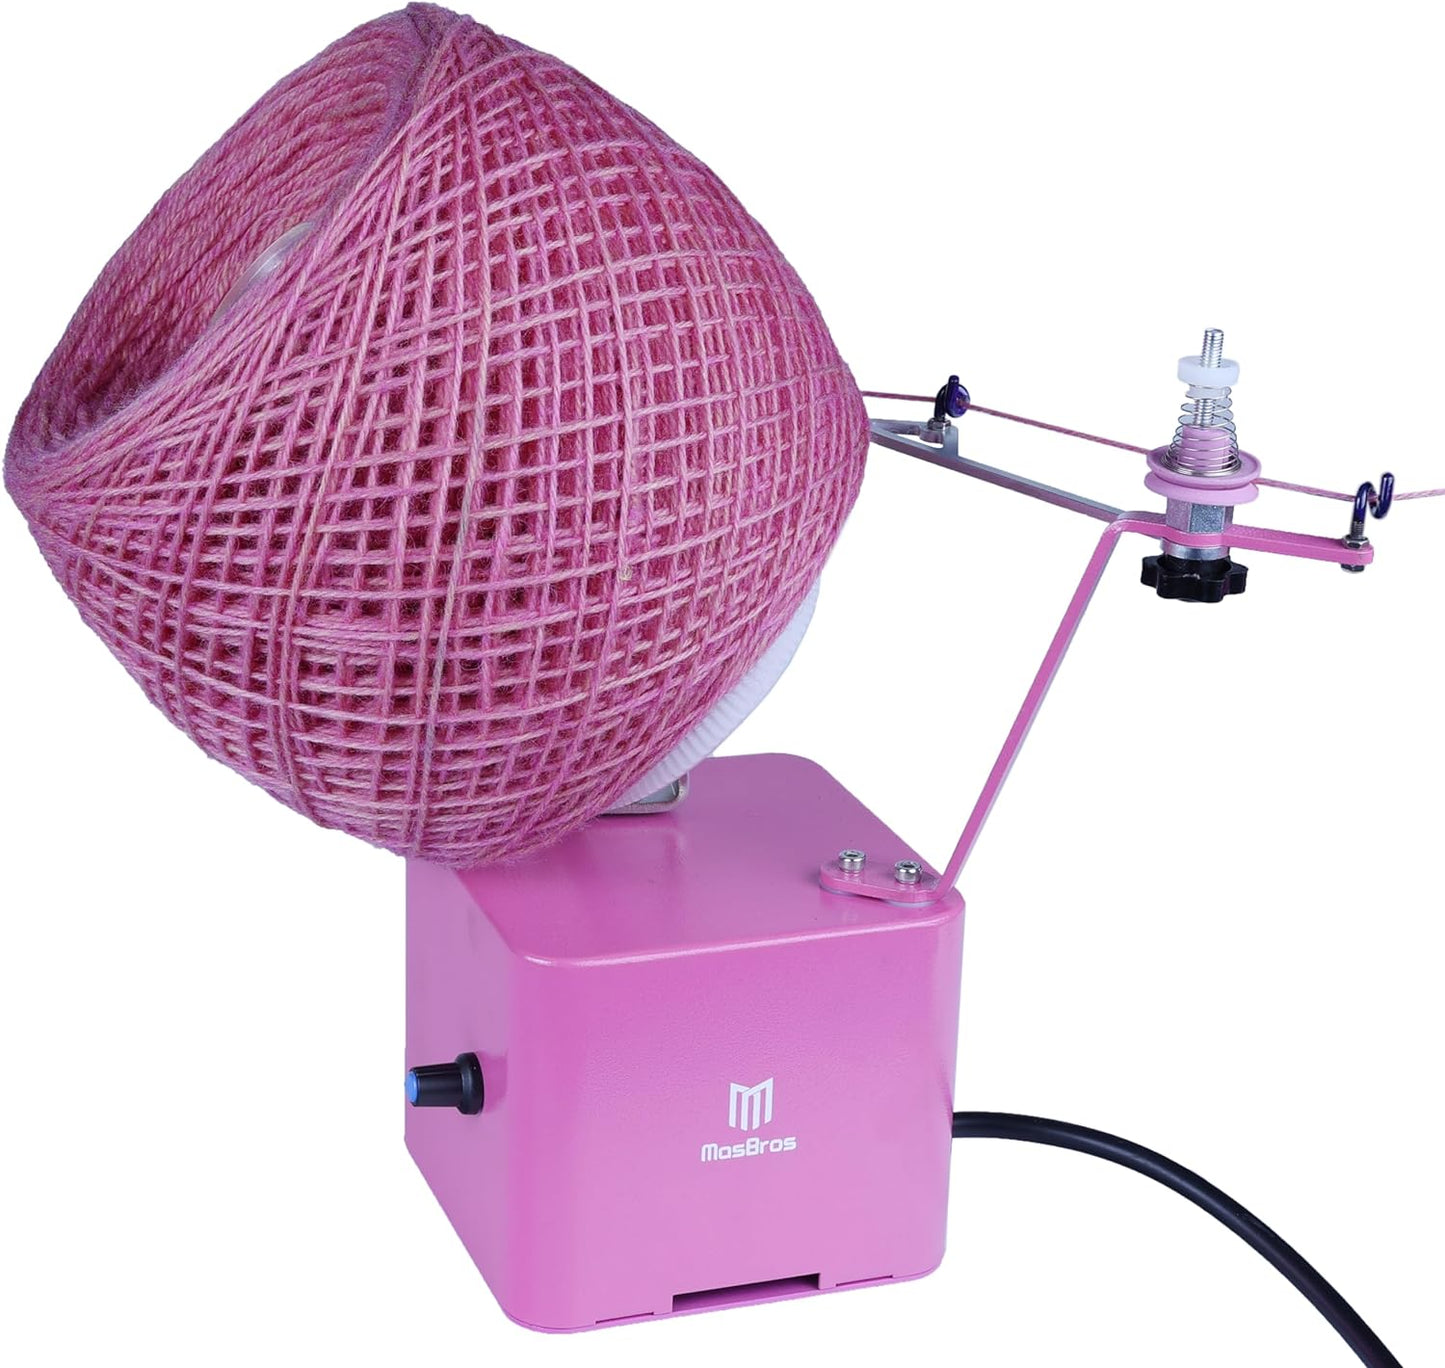 Electric Jumbo Yarn Winder Heavy Duty Yarn Winder with Precise Yarn Guide Arm Wind up to 450 Grams 15 Oz (Pink)